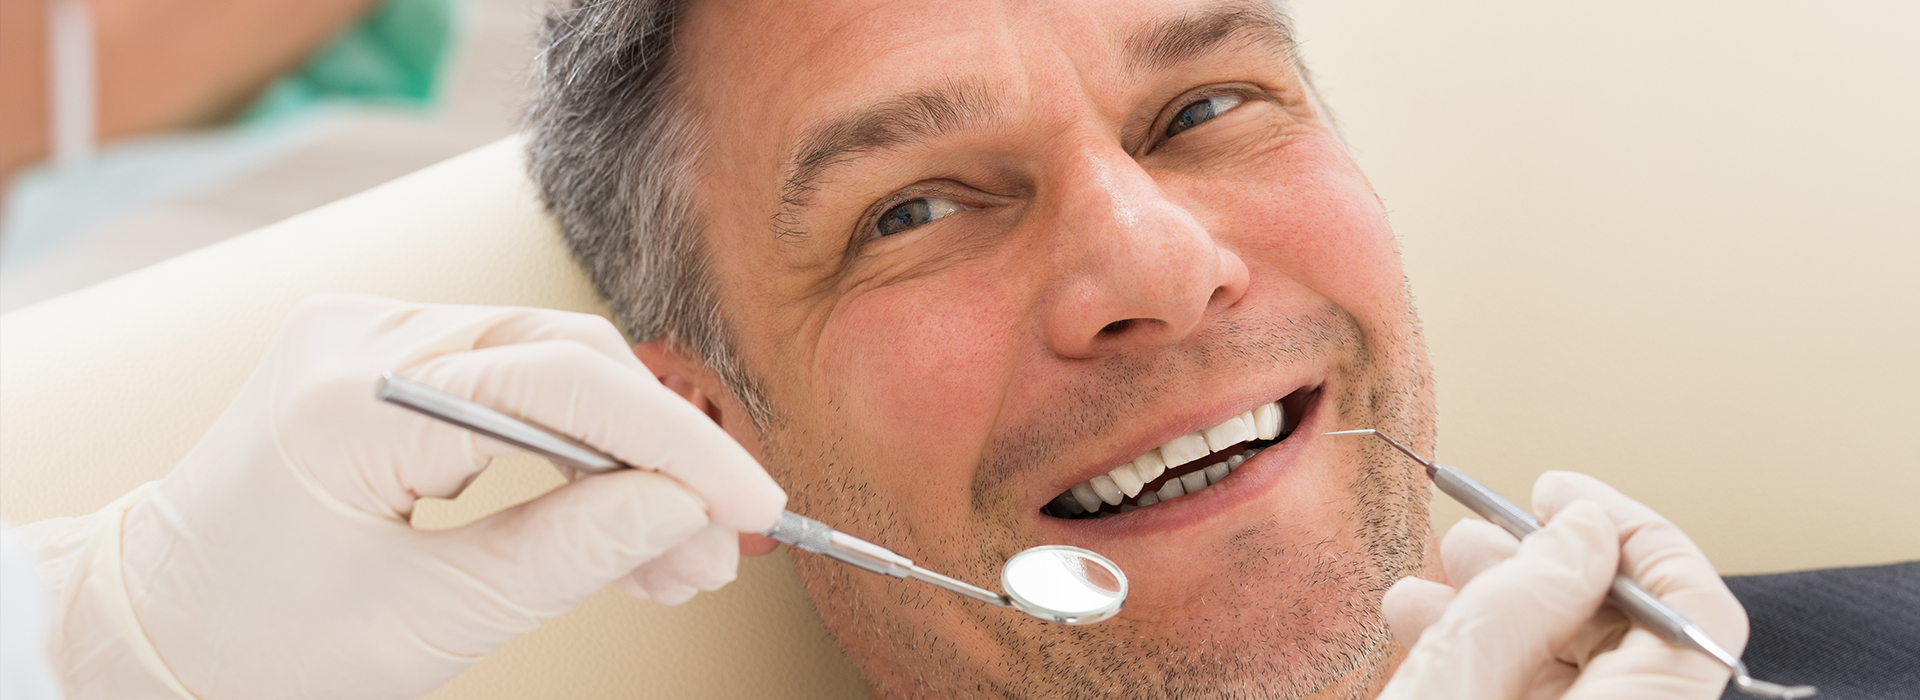 North Texas Dental Care | Pediatric Dentistry, Dental Lab and Implant Dentistry